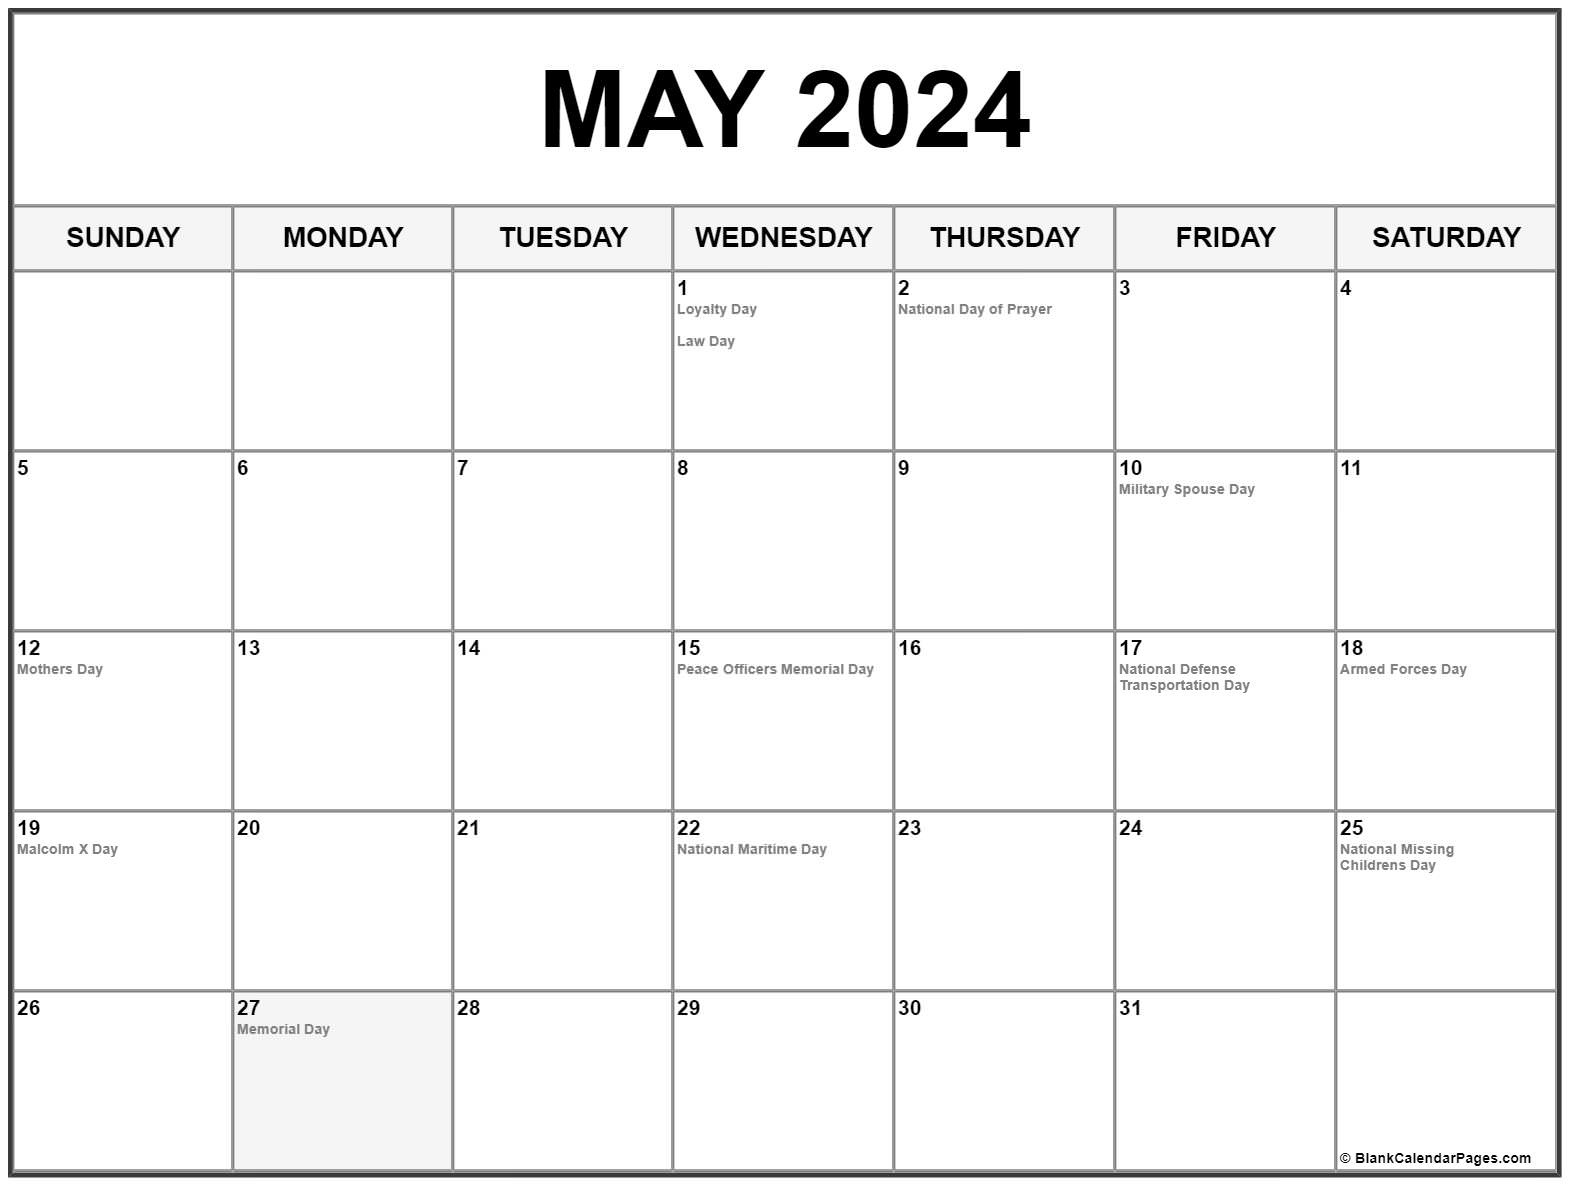 Memorial Day 2021 Calendar May 2021 calendar with holidays